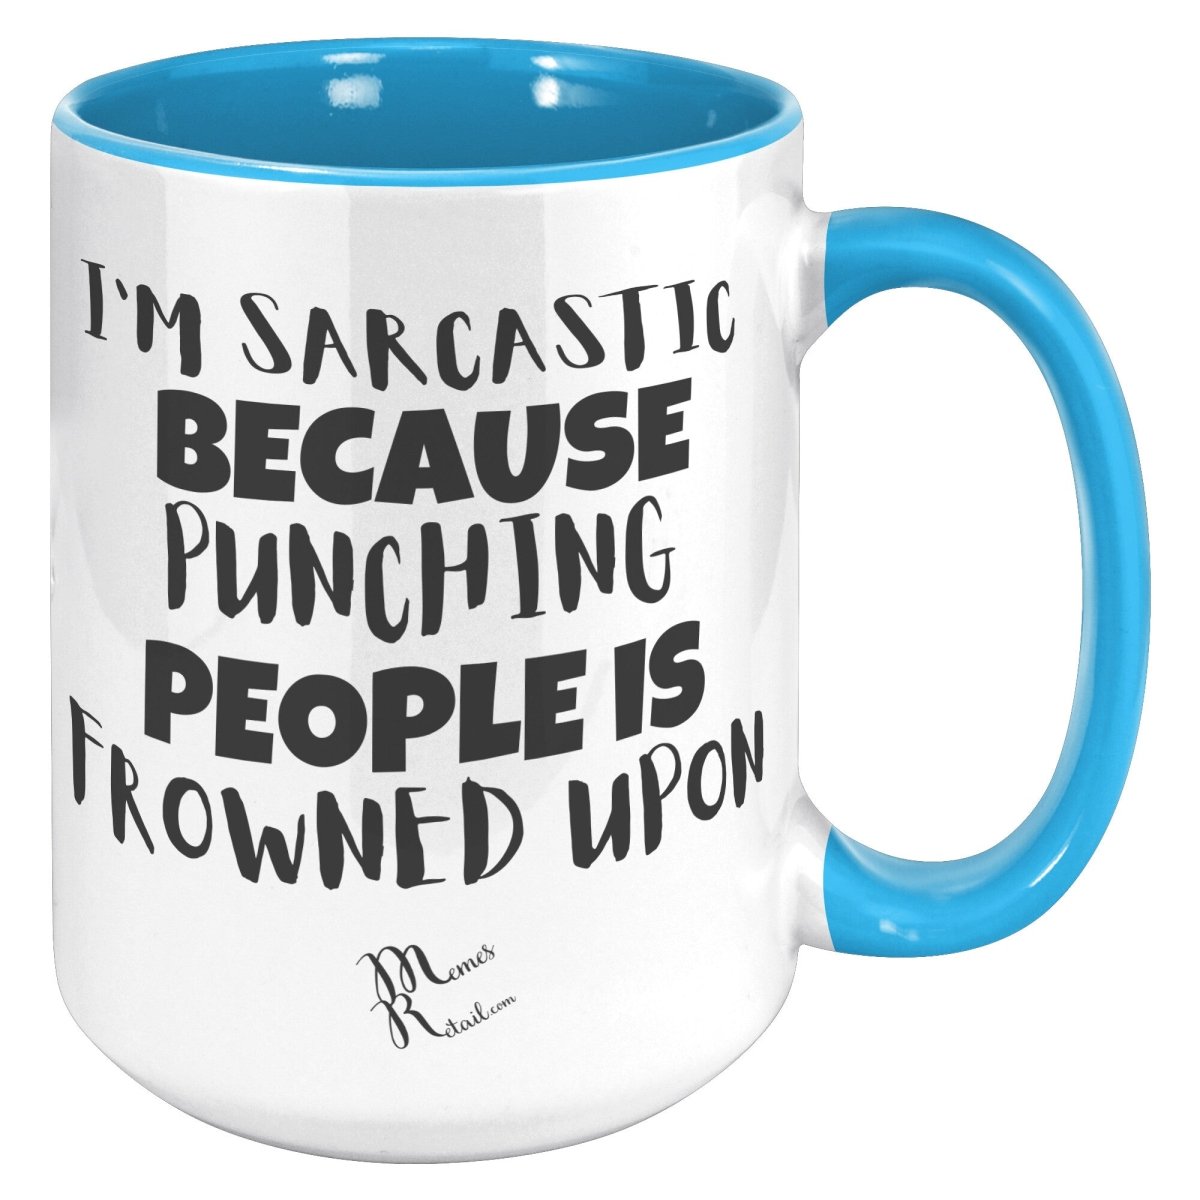 I'm Sarcastic Because Punching People is frowned upon 11oz 15oz Mugs, 15oz Accent Mug / Blue - MemesRetail.com